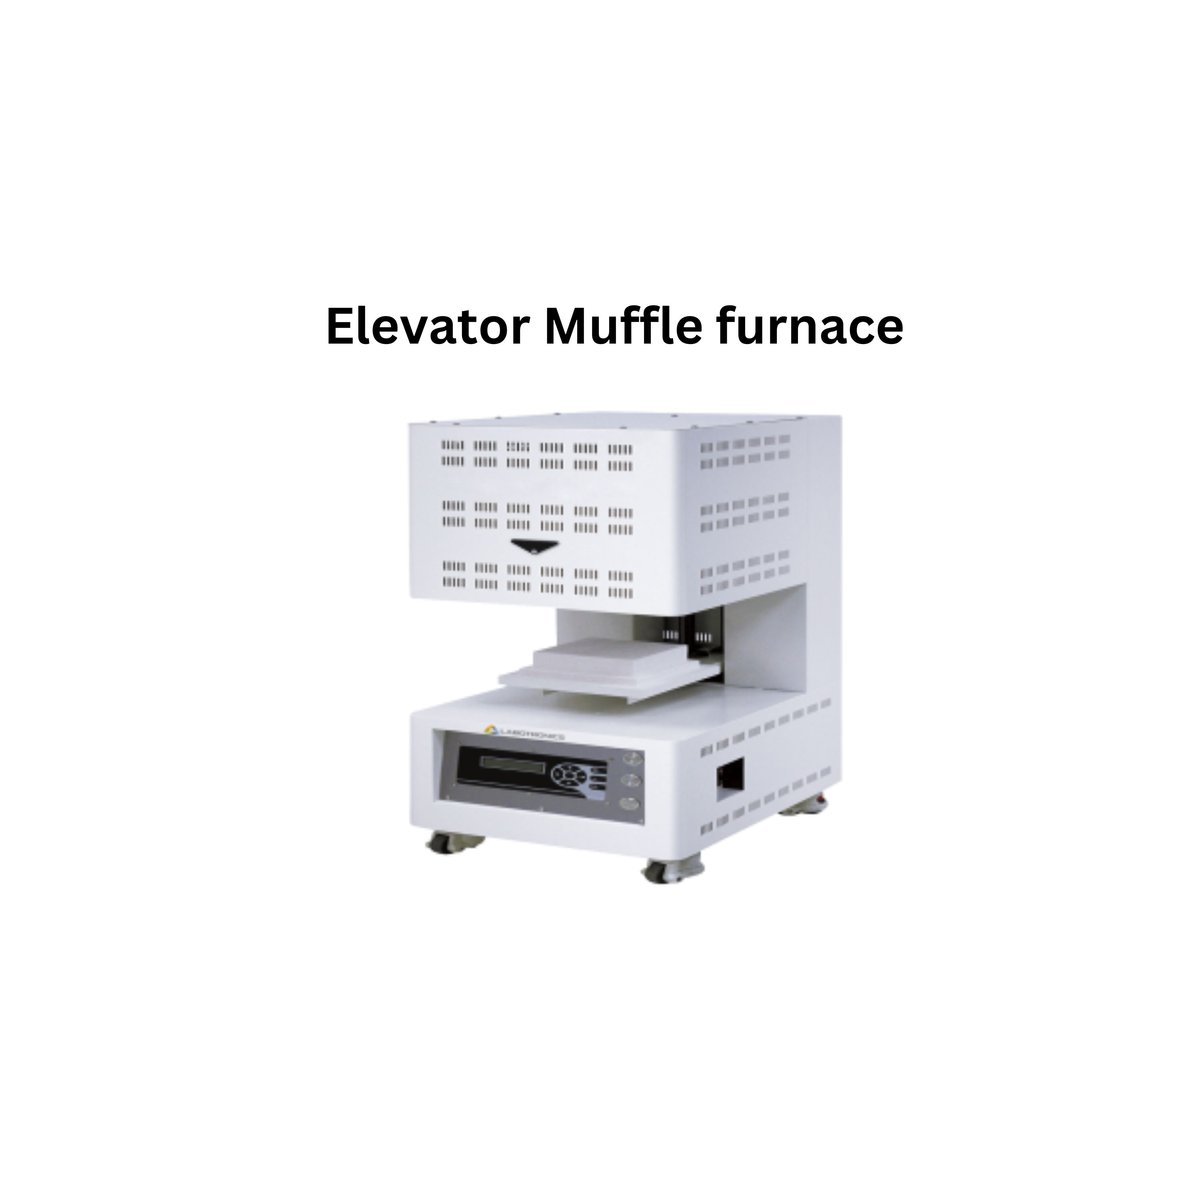 Elevator Muffle furnace.jpg